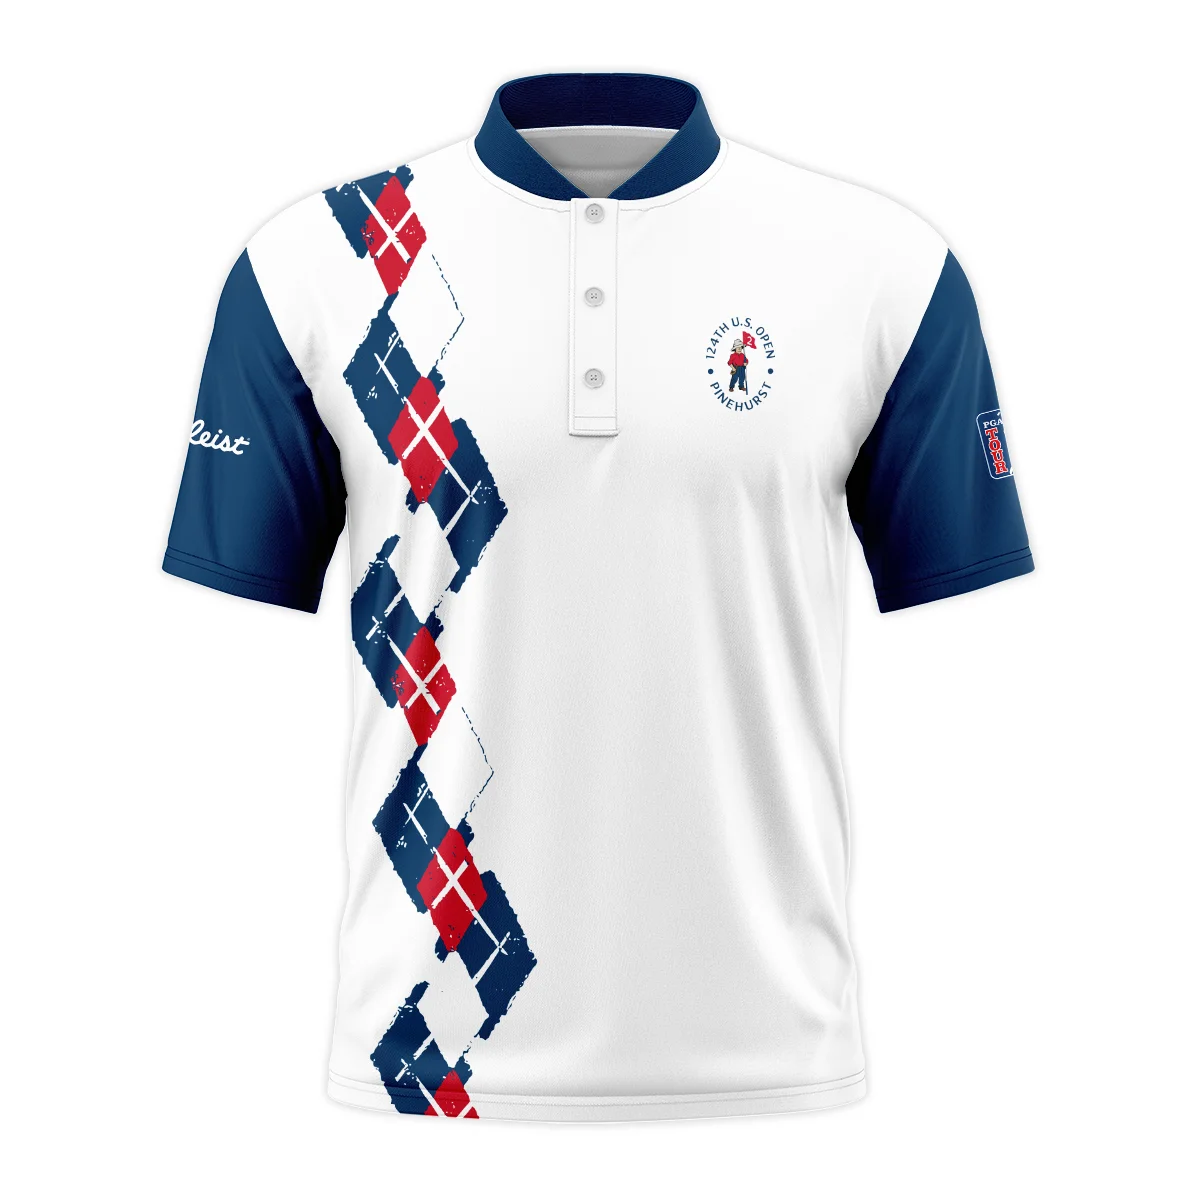 Golf Sport Pattern Blue Mix Color 124th U.S. Open Pinehurst Titlest Hoodie Shirt Style Classic